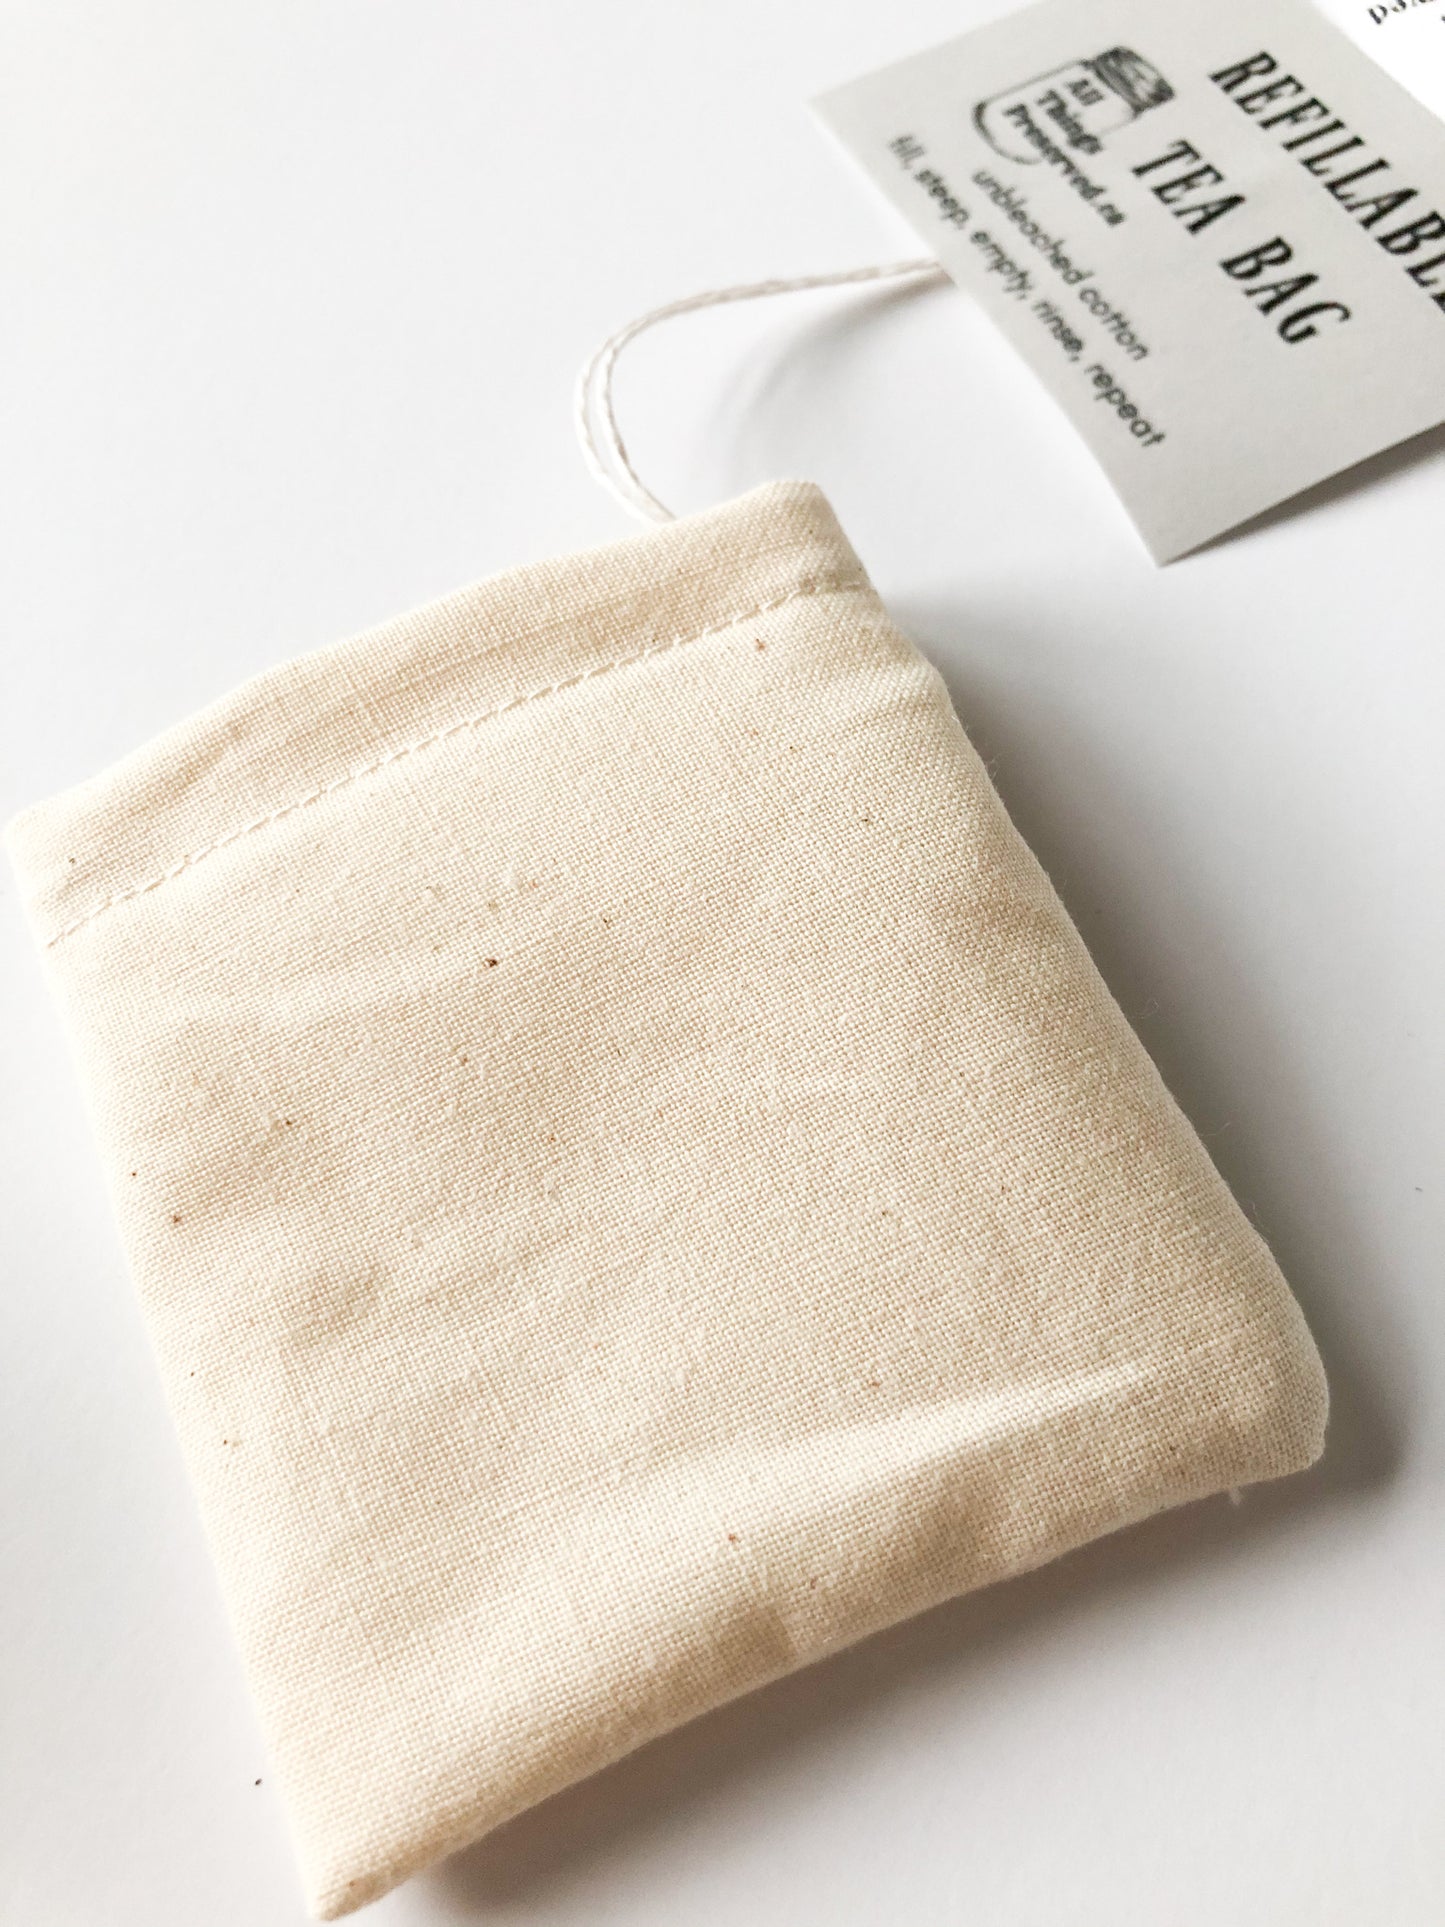 Reusable Tea Bags - Handmade 100% Unbleached Cotton Muslin